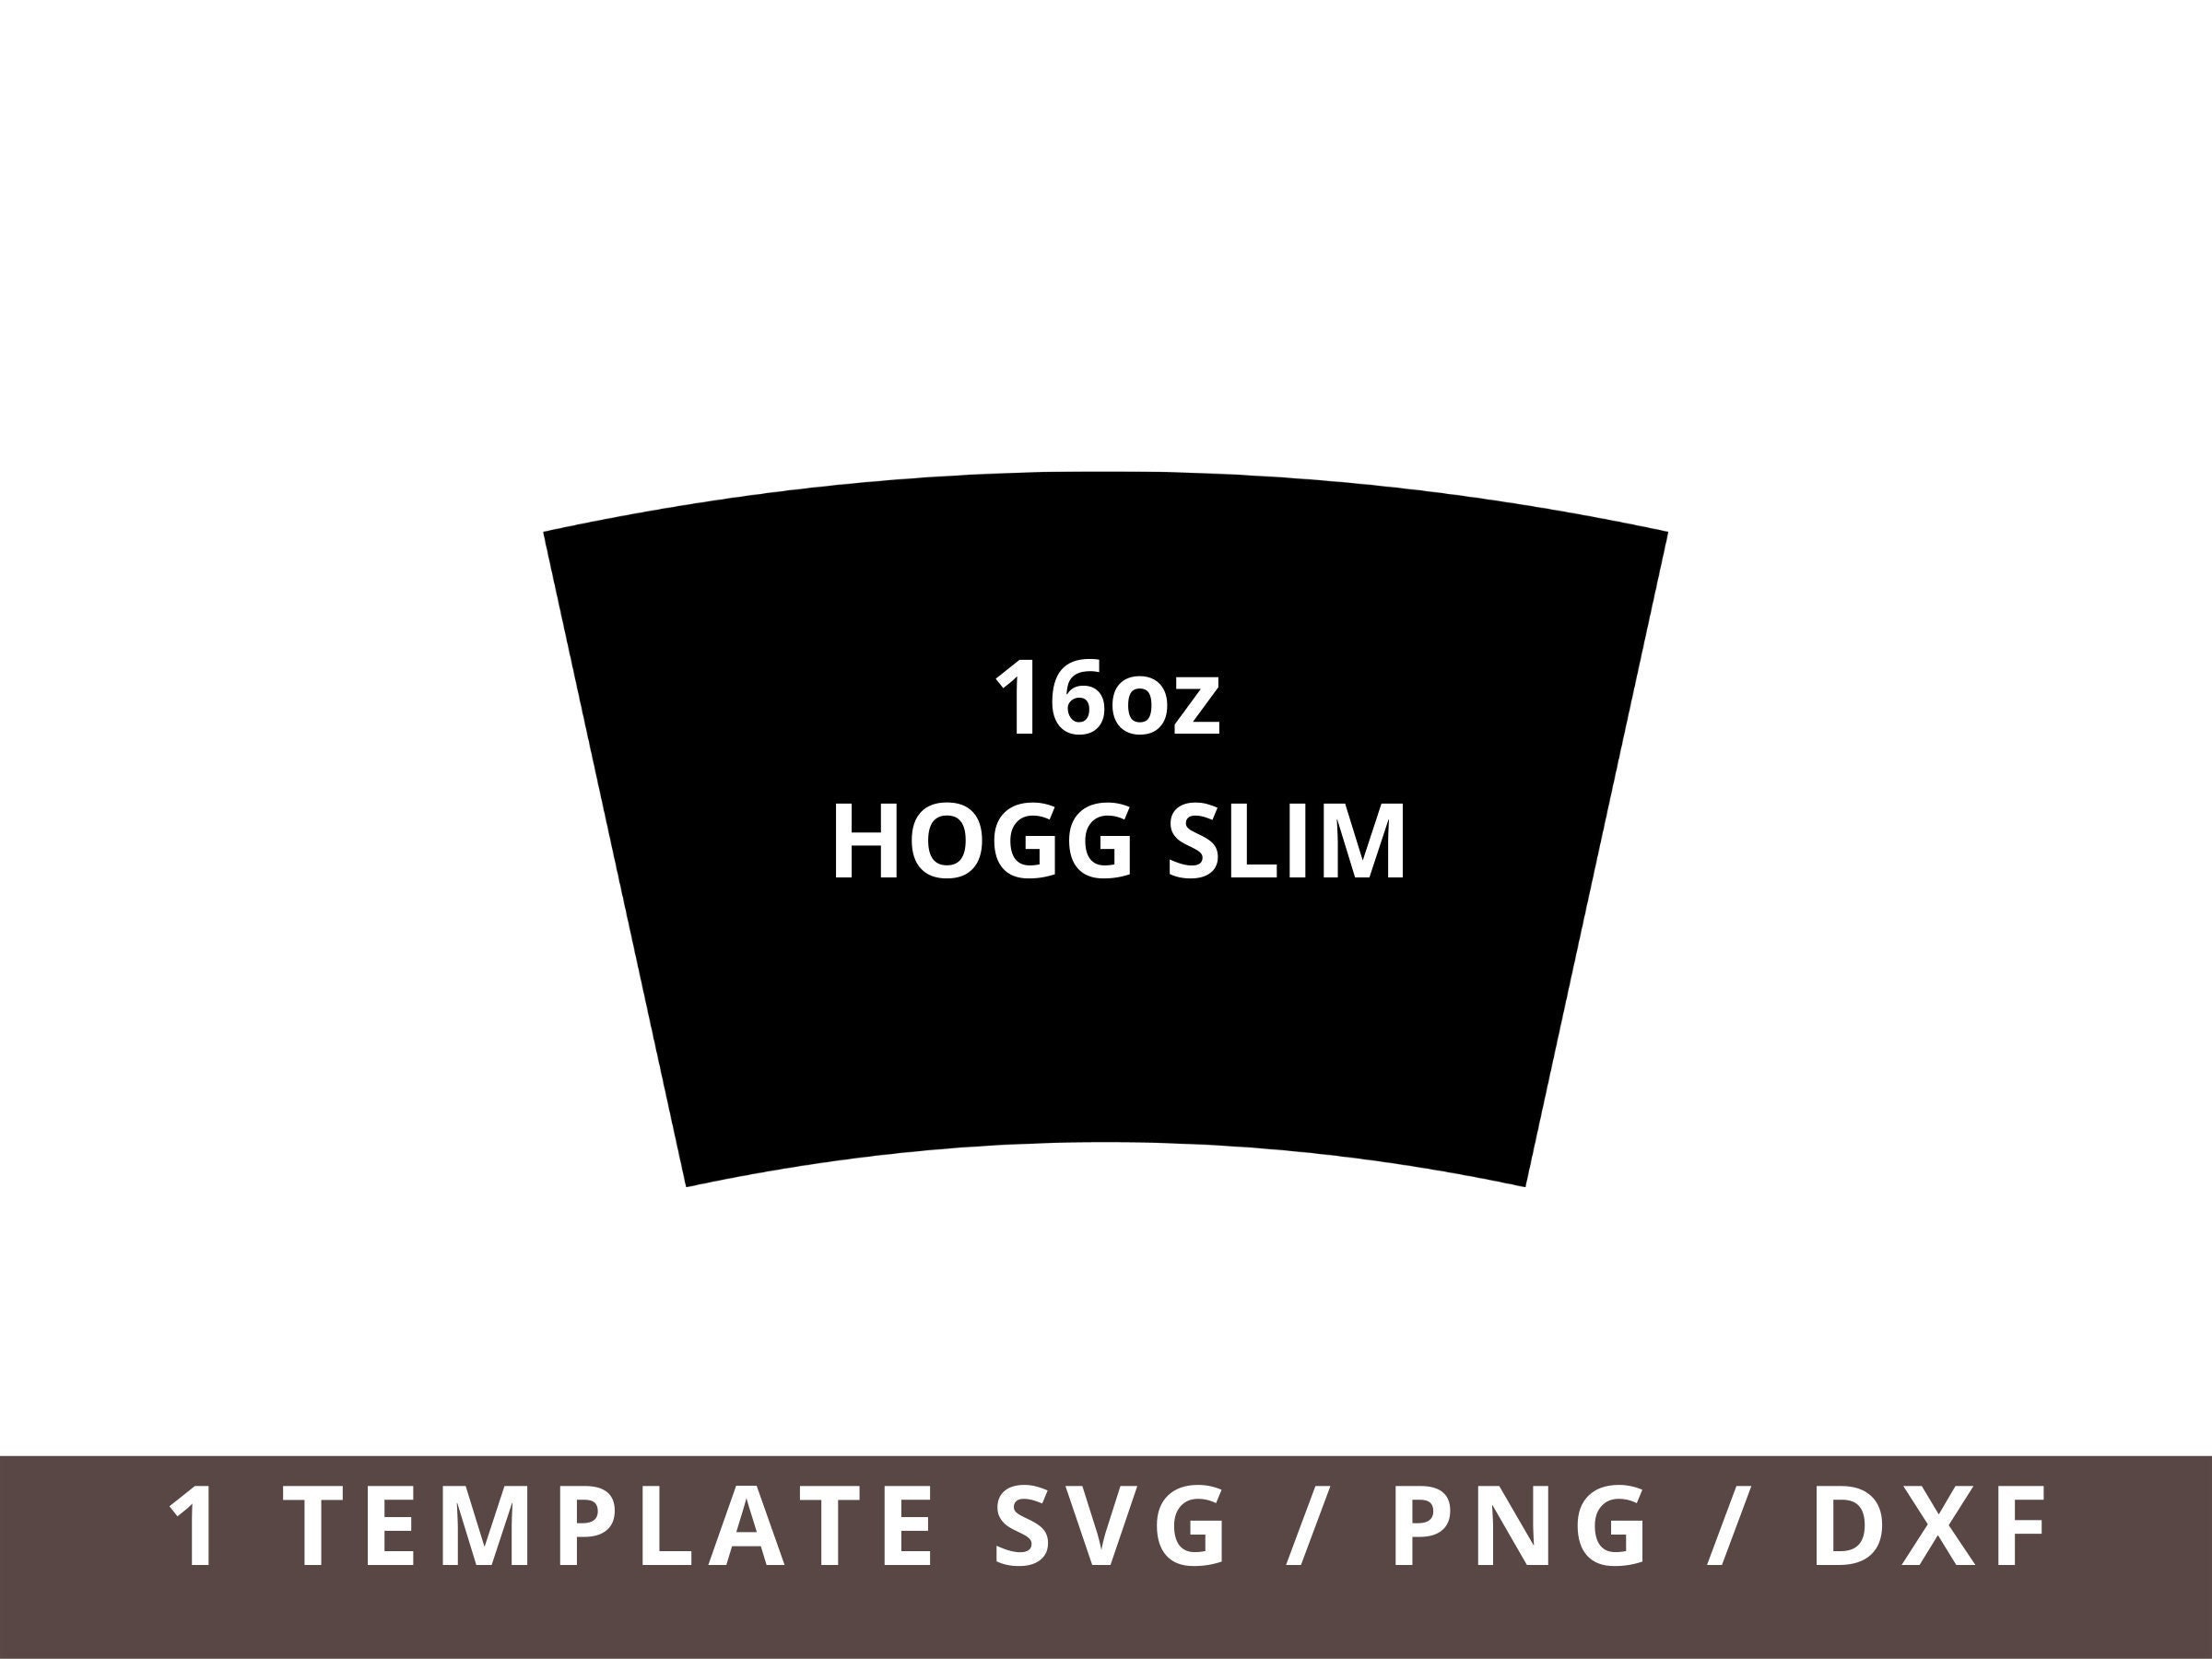 22oz HOGG Slim Tumbler BLANK Template for Sublimation, Full Wrap, DIY,  Canva, Cricut, Photoshop, Svg, Png, Instant Download 